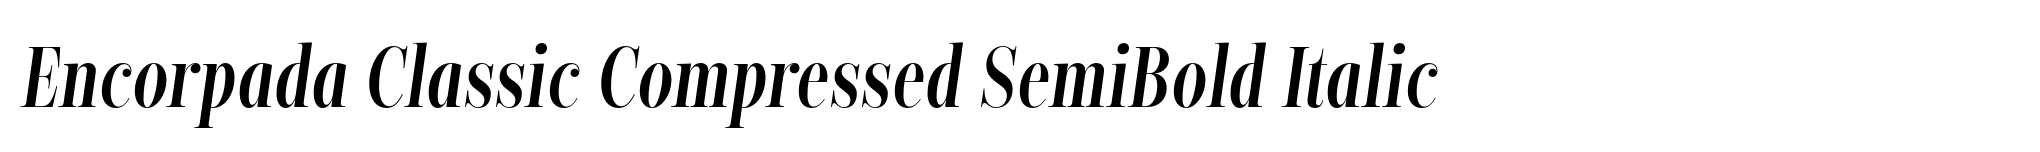 Encorpada Classic Compressed SemiBold Italic image